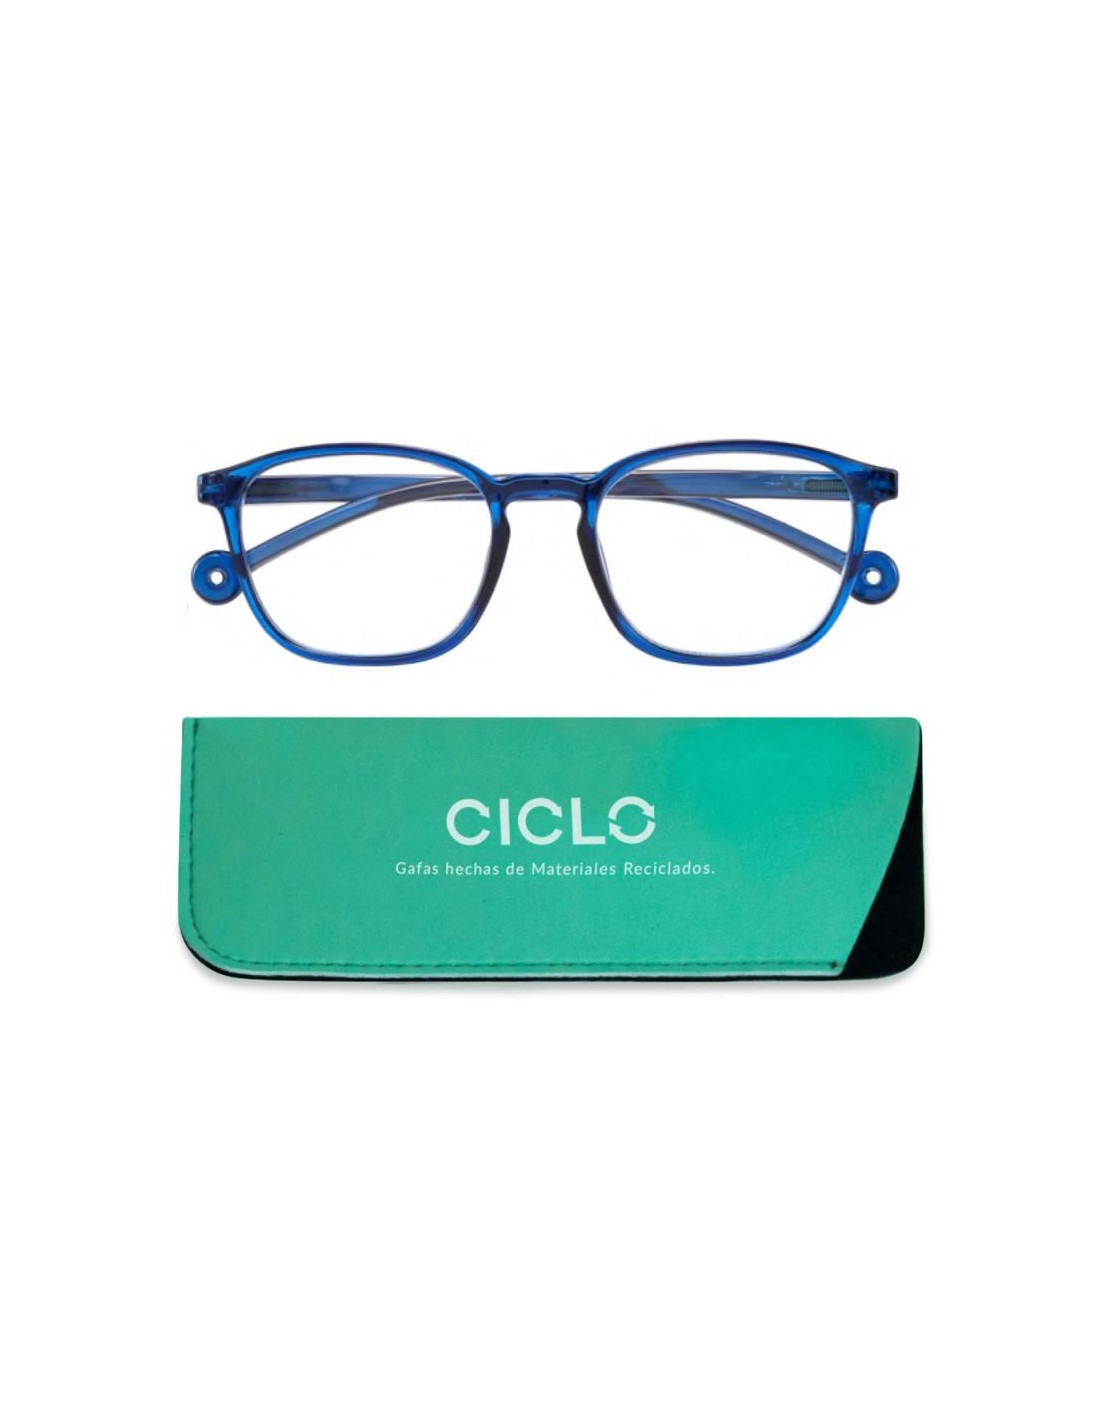 Gafas presbicia para farmacias  gafas vista cansada de calidad óptica